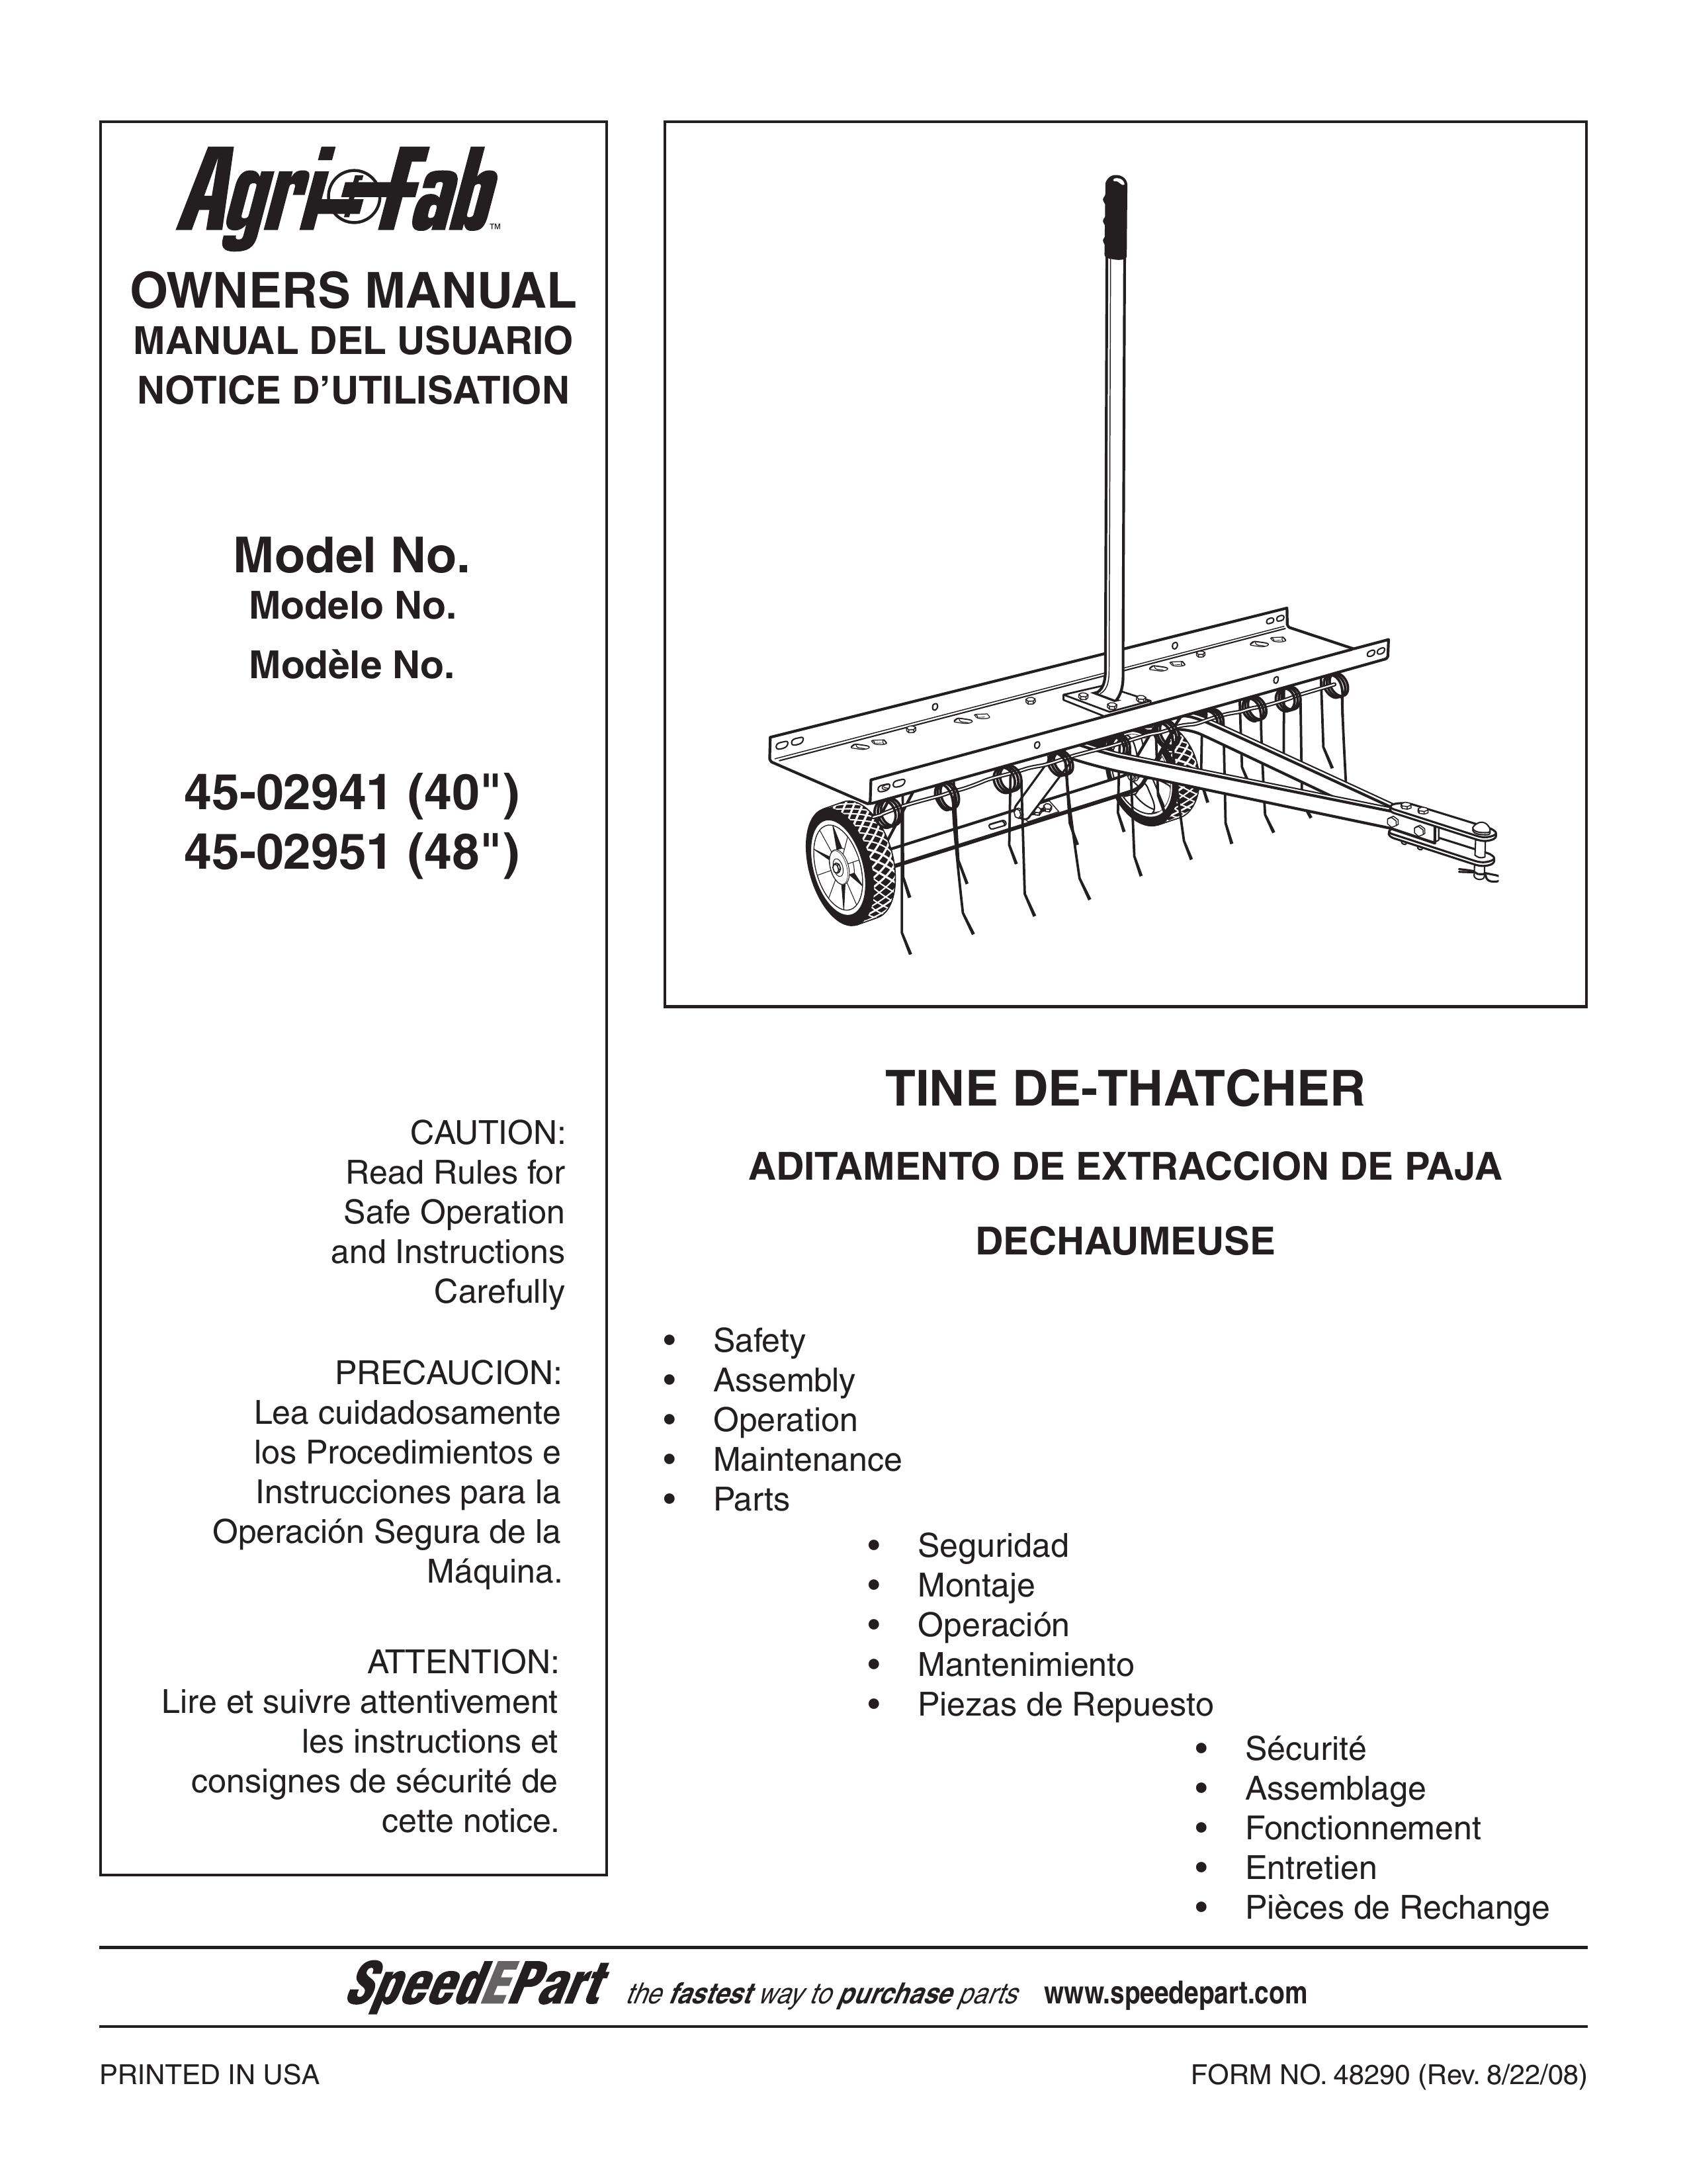 Agri-Fab 45-02951 Lawn Aerator User Manual